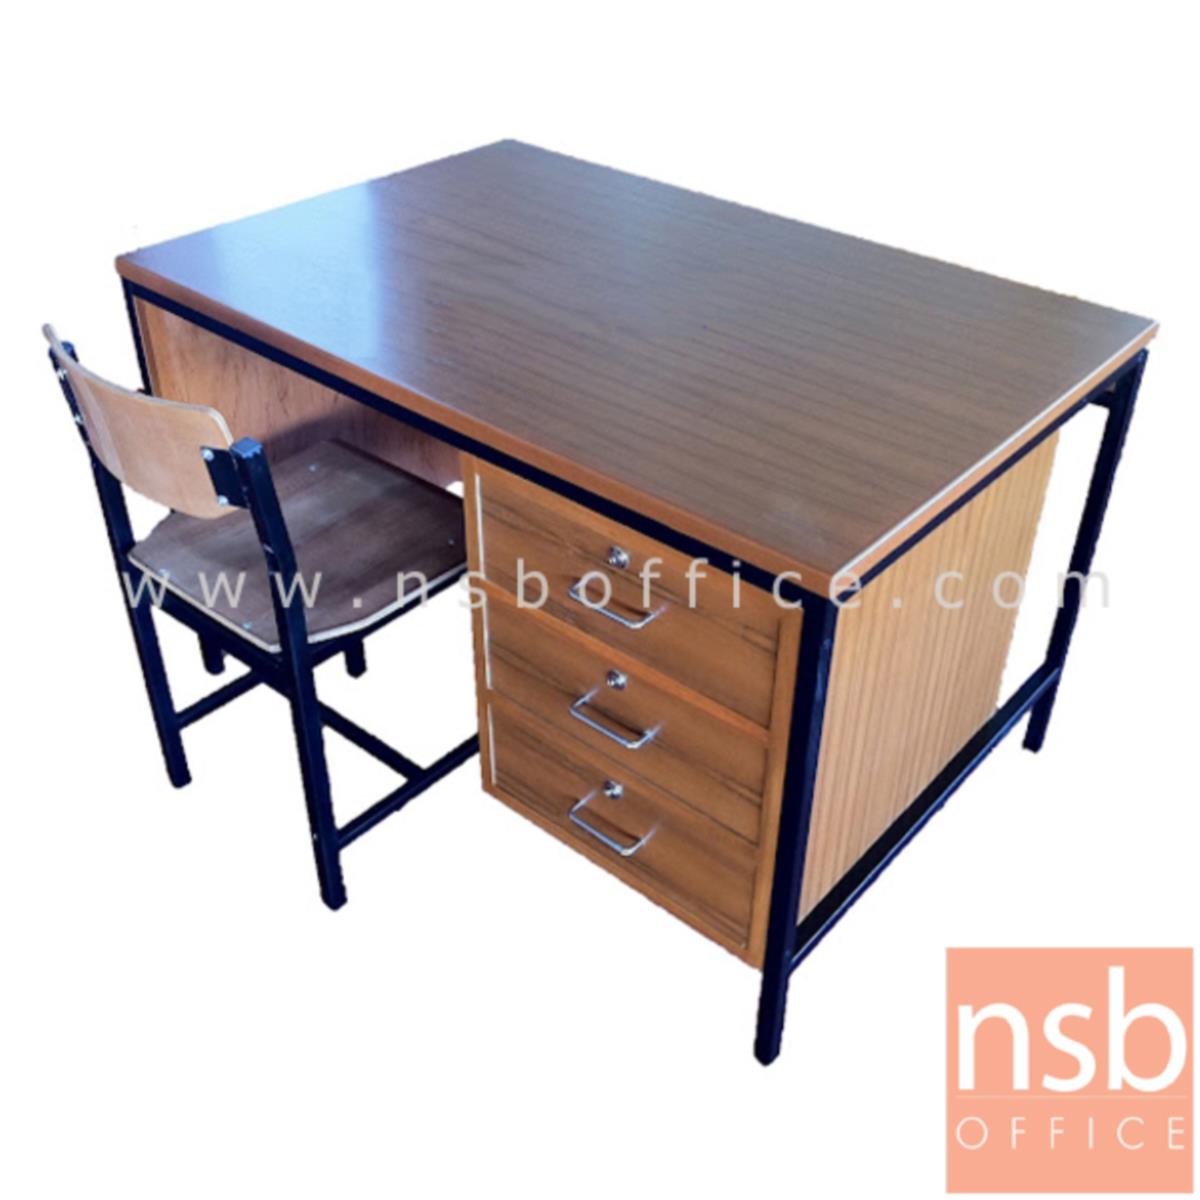 A17A004:ชุดโต๊ะและเก้าอี้ข้าราชการ  รุ่น Mirabelle (มิราเบล)  ครุภัณฑ์โต๊ะครู 